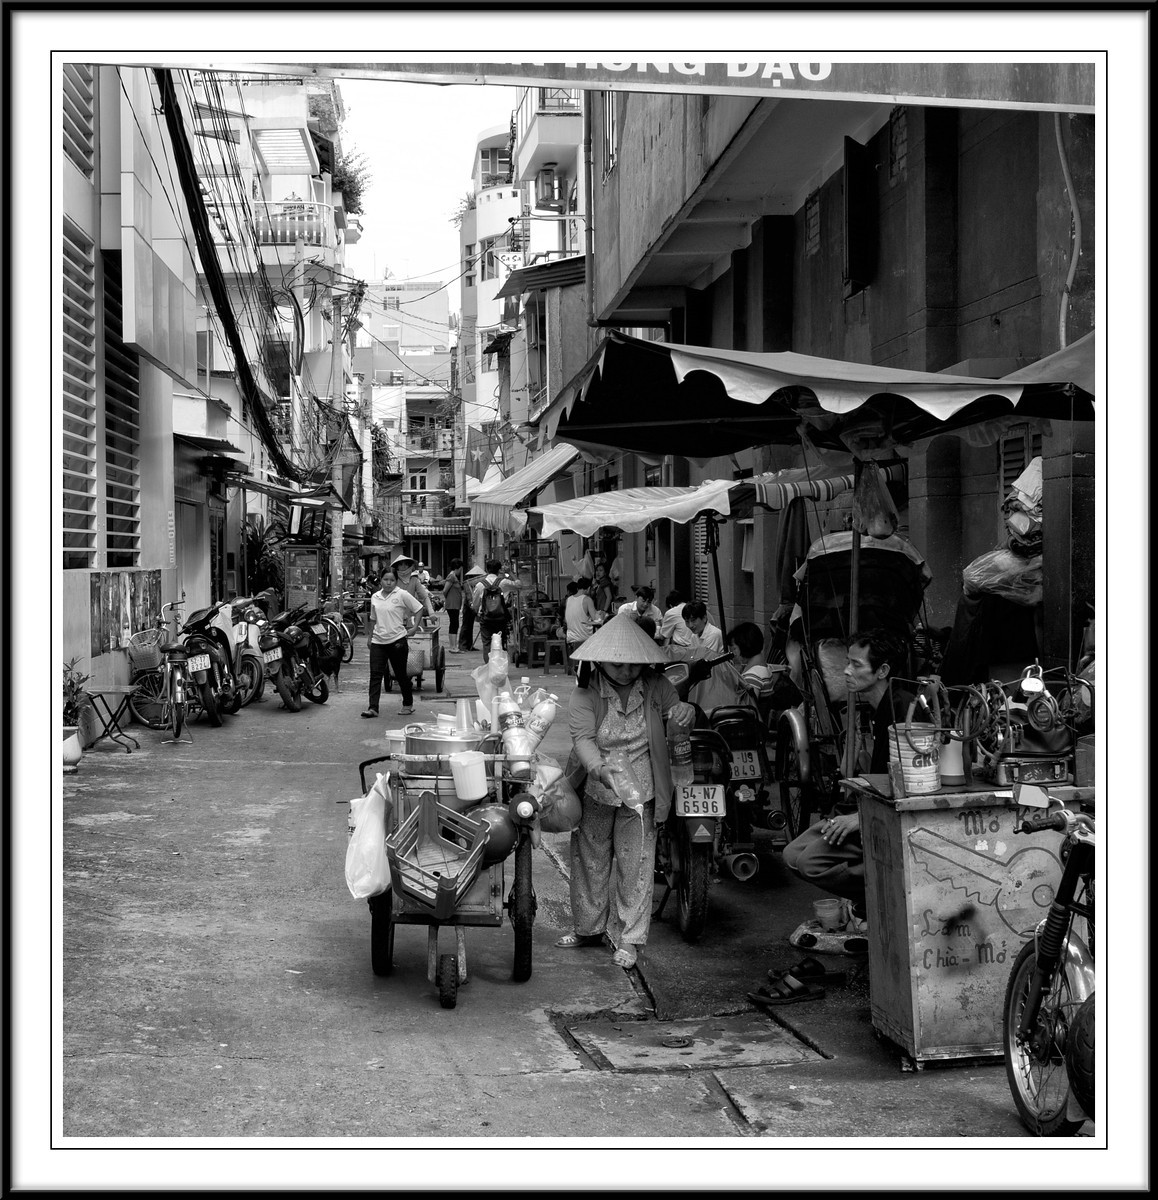      

 
  Small street in Saigon Vietnam
 






















     